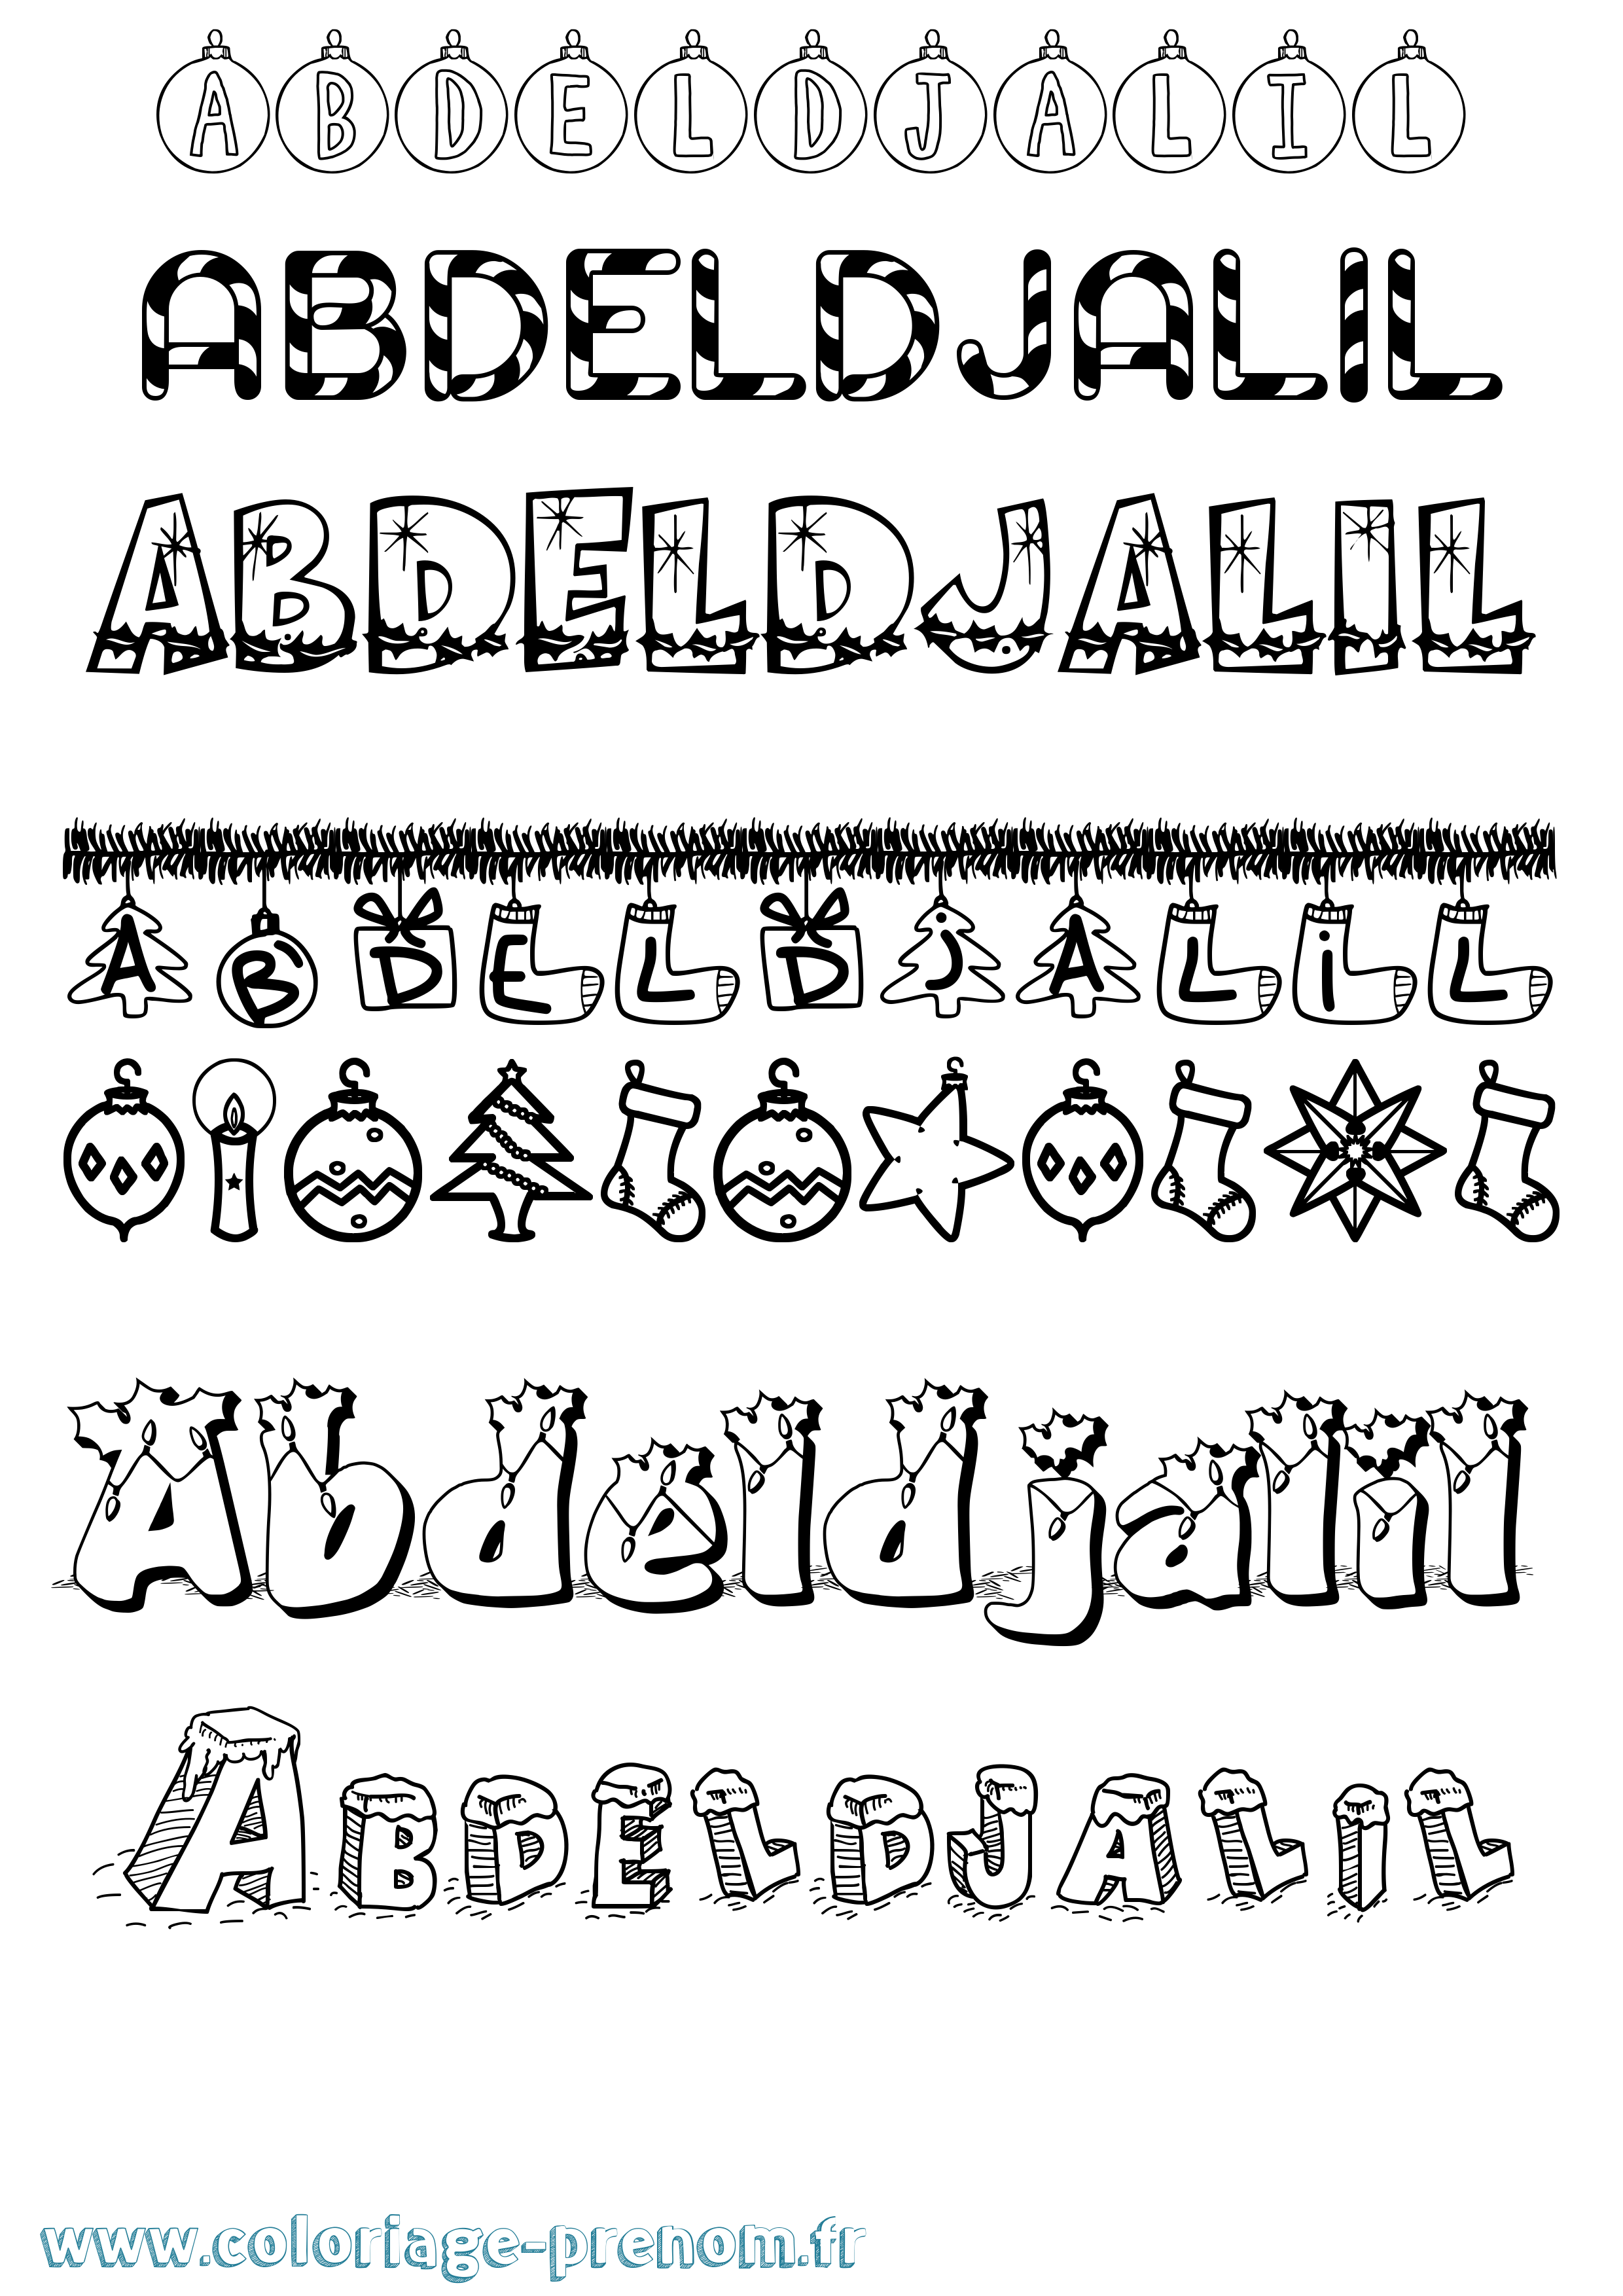 Coloriage prénom Abdeldjalil Noël